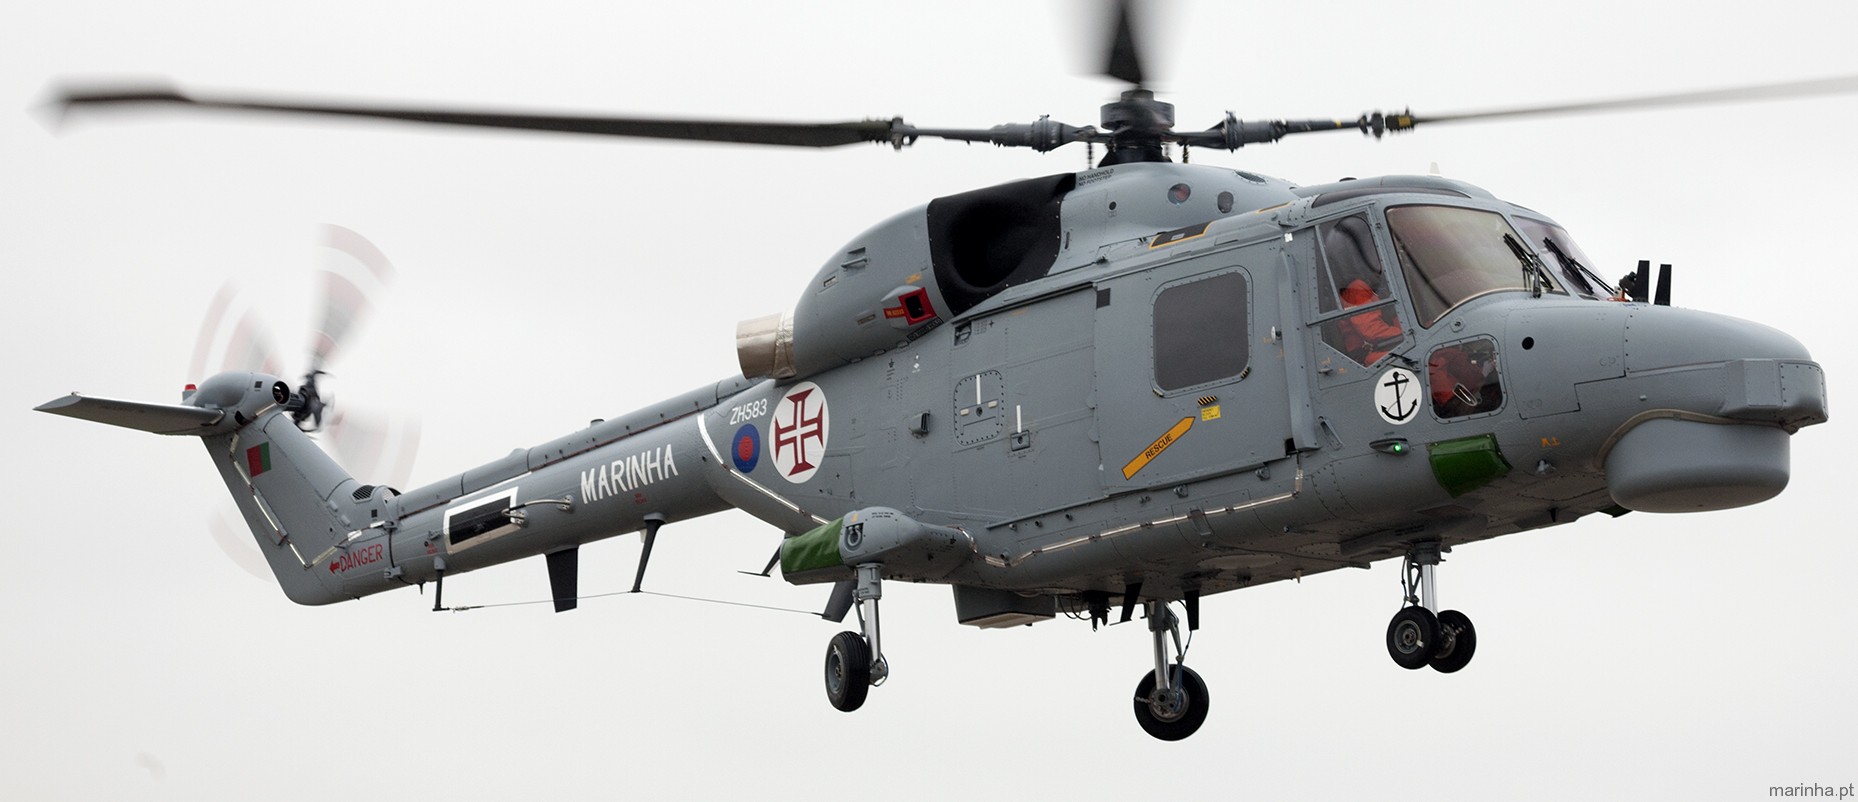 westland super lynx mk.95a naval helicopter portuguese navy marinha 04